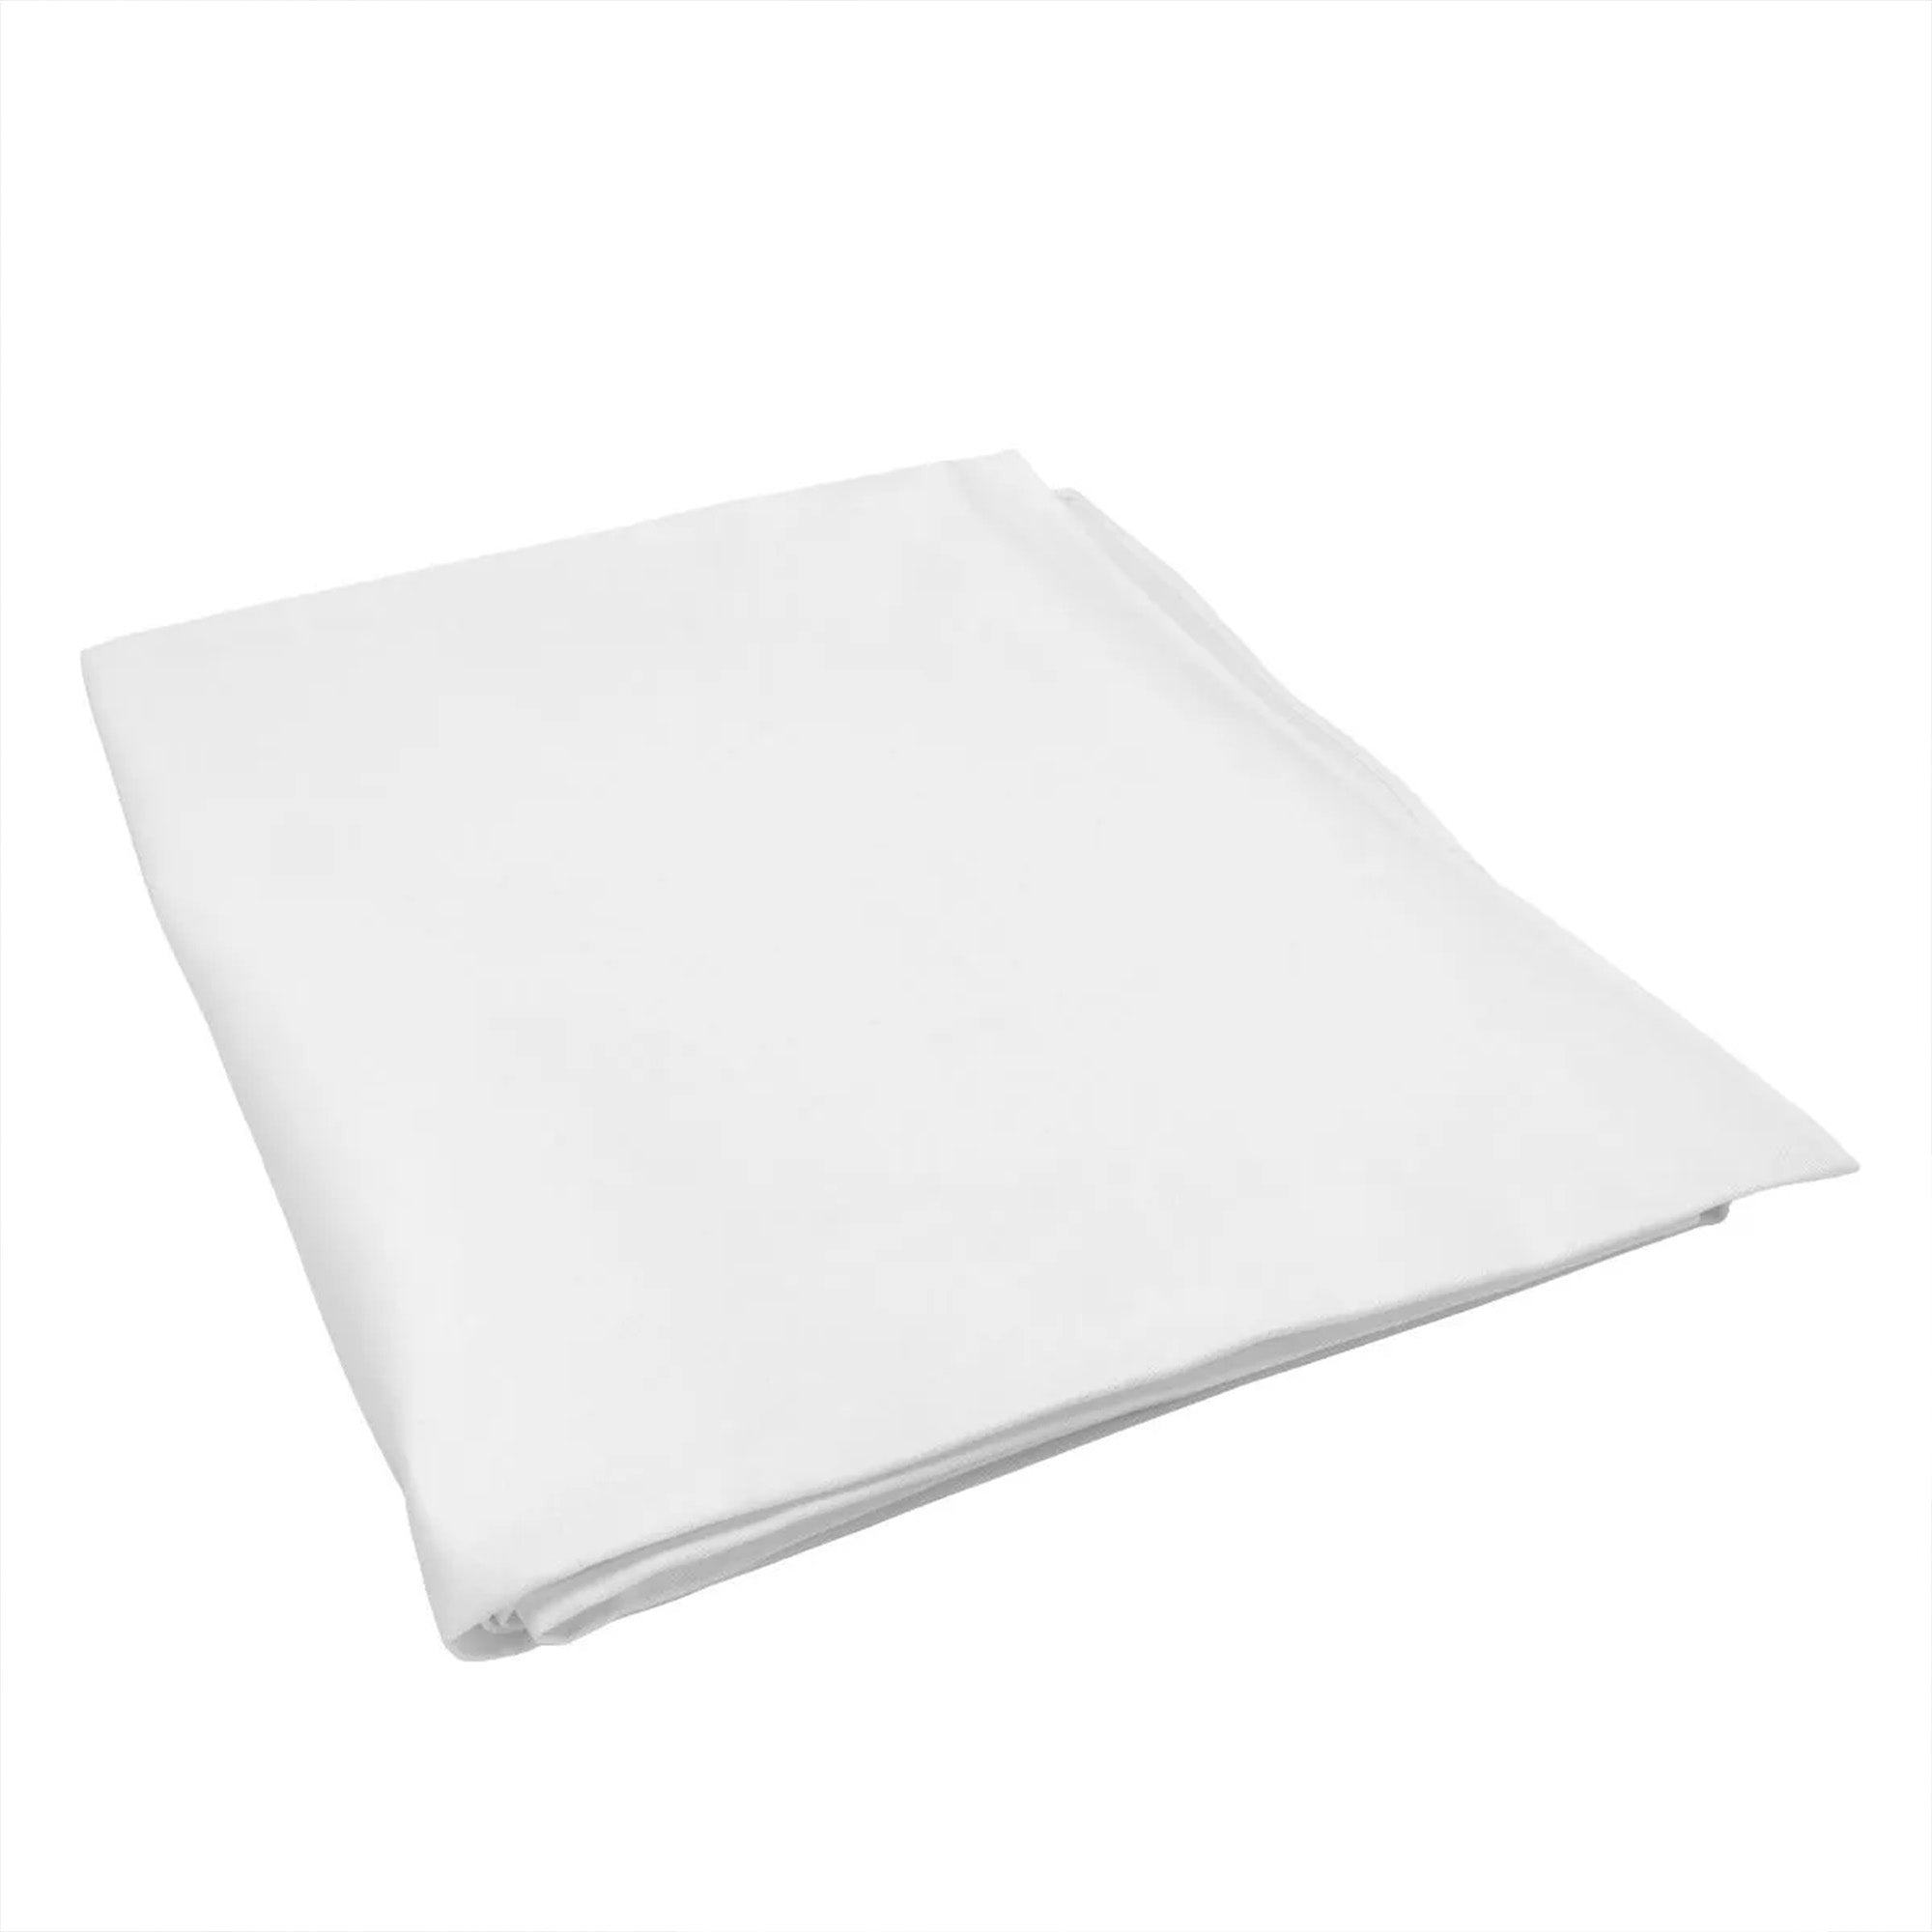 (30 броя) Дамаска покривка Porto - гладък сатен - 130 x 130 см - бял